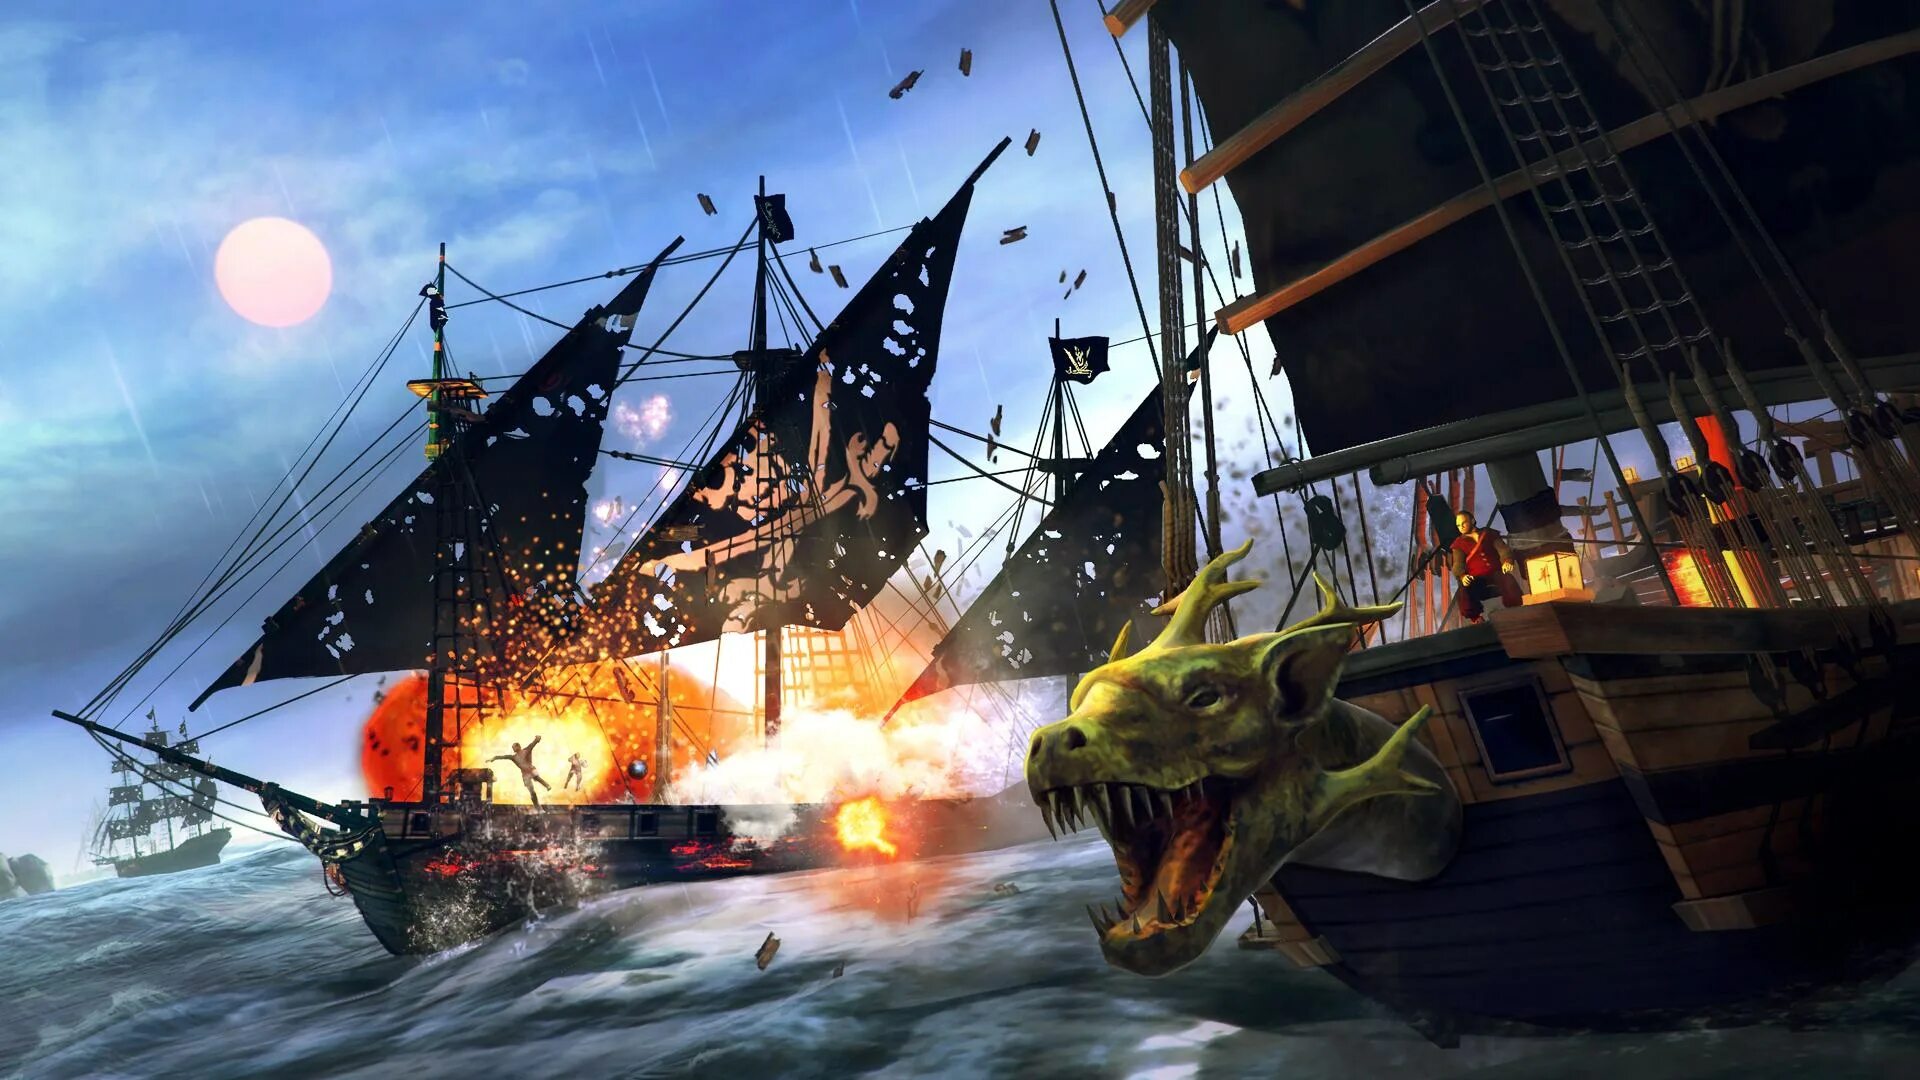 Tempest: Pirate Action RPG. Under the Jolly Roger игра. Пиратский корабль. Игра про корабли и пиратов.